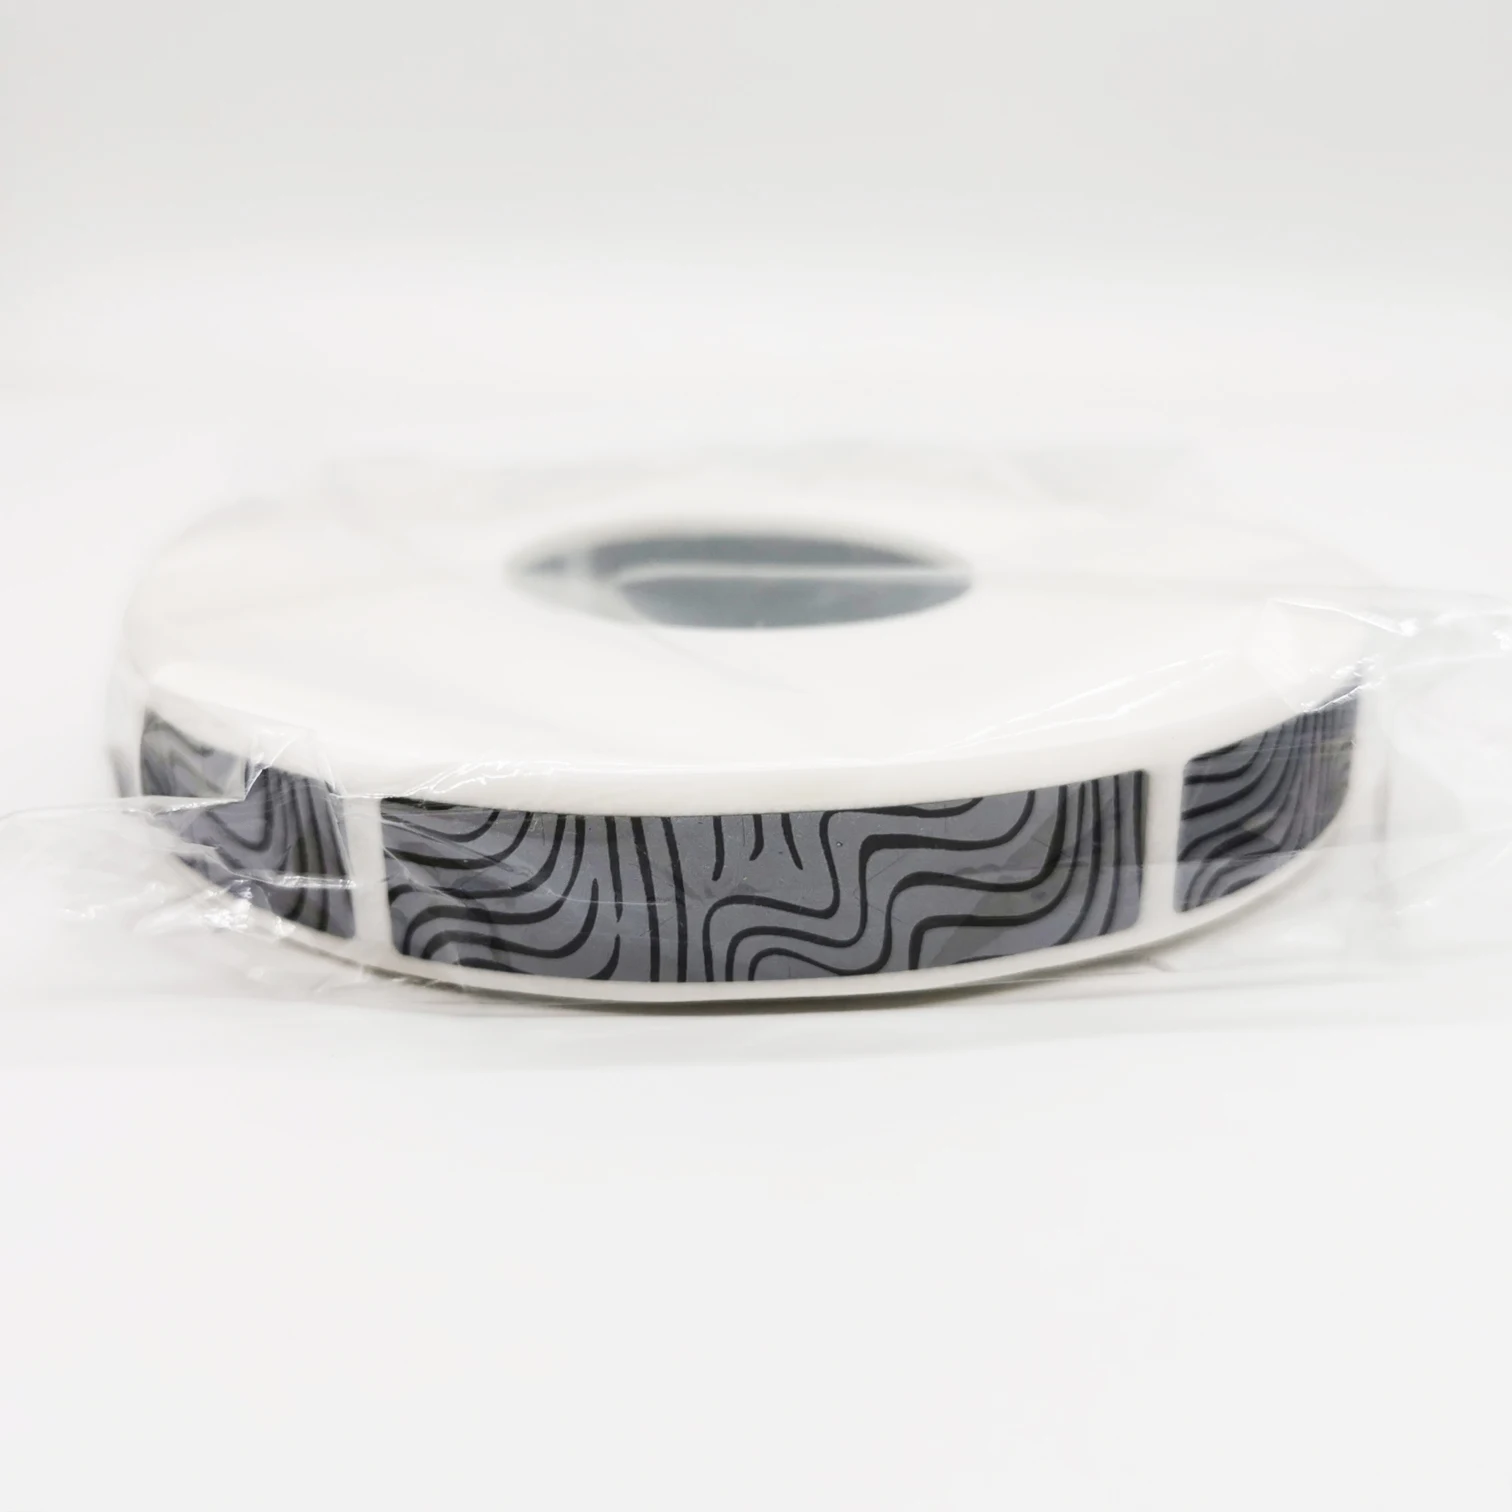 1000pcs 11mmx50mm Manual SCRATCH OFF STICKER LABEL Zebra pattern Tape in Rolls Code Covering Film  Game Wedding